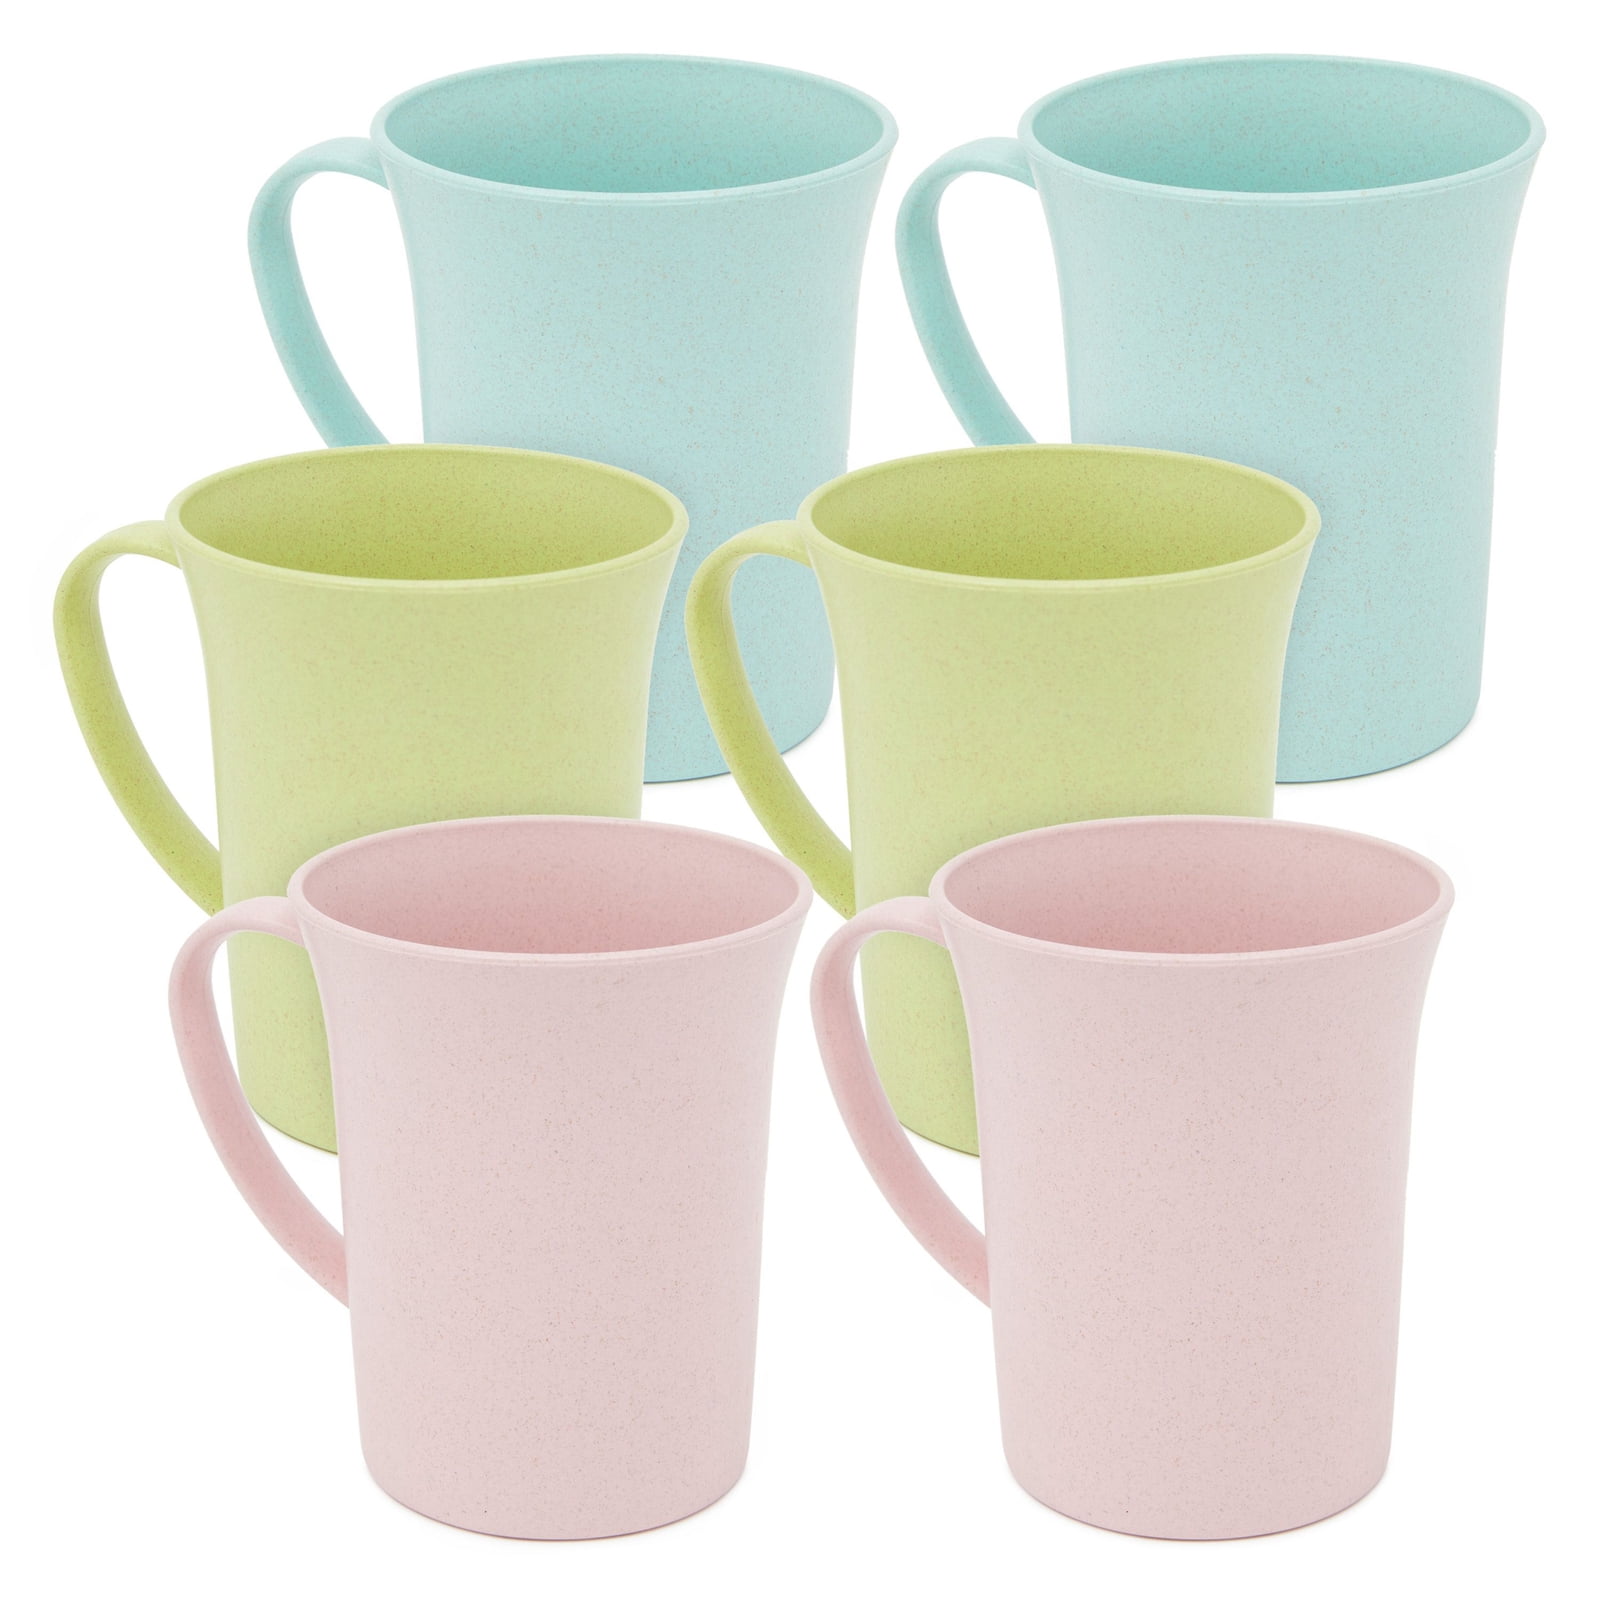 Unbreakable plastic mugs for bath,bathroom Bath Accessory various colours 